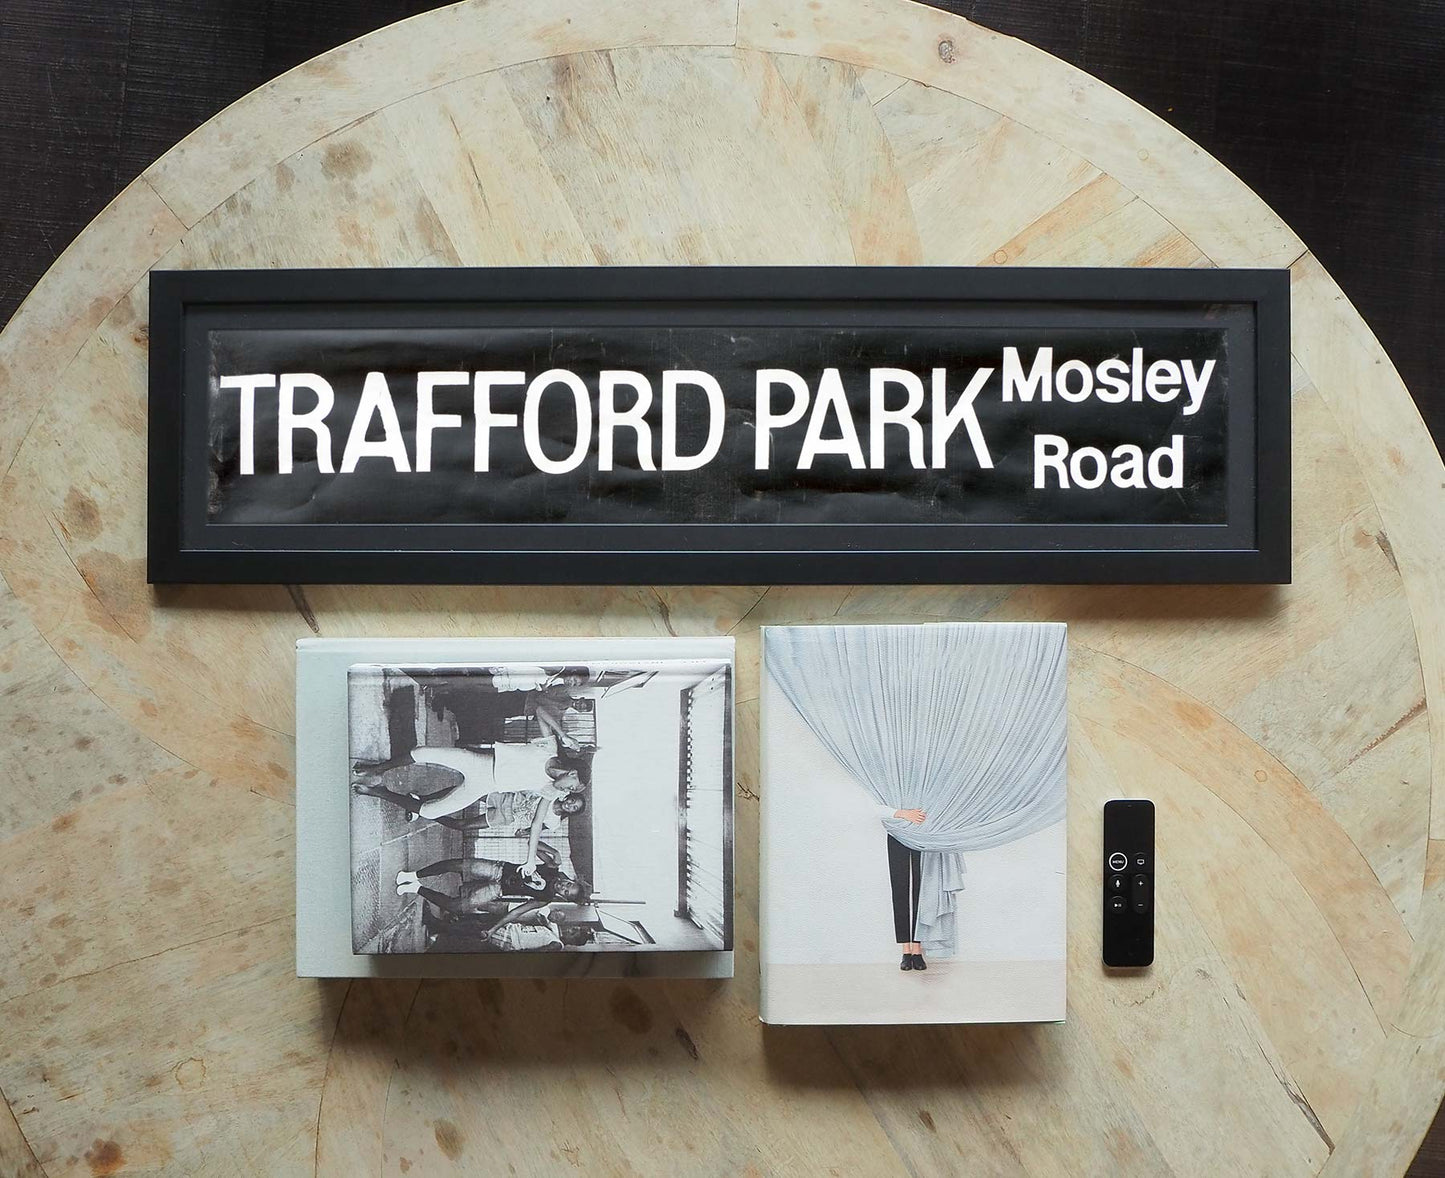 Trafford Park Mosley Road Framed Bus Blind